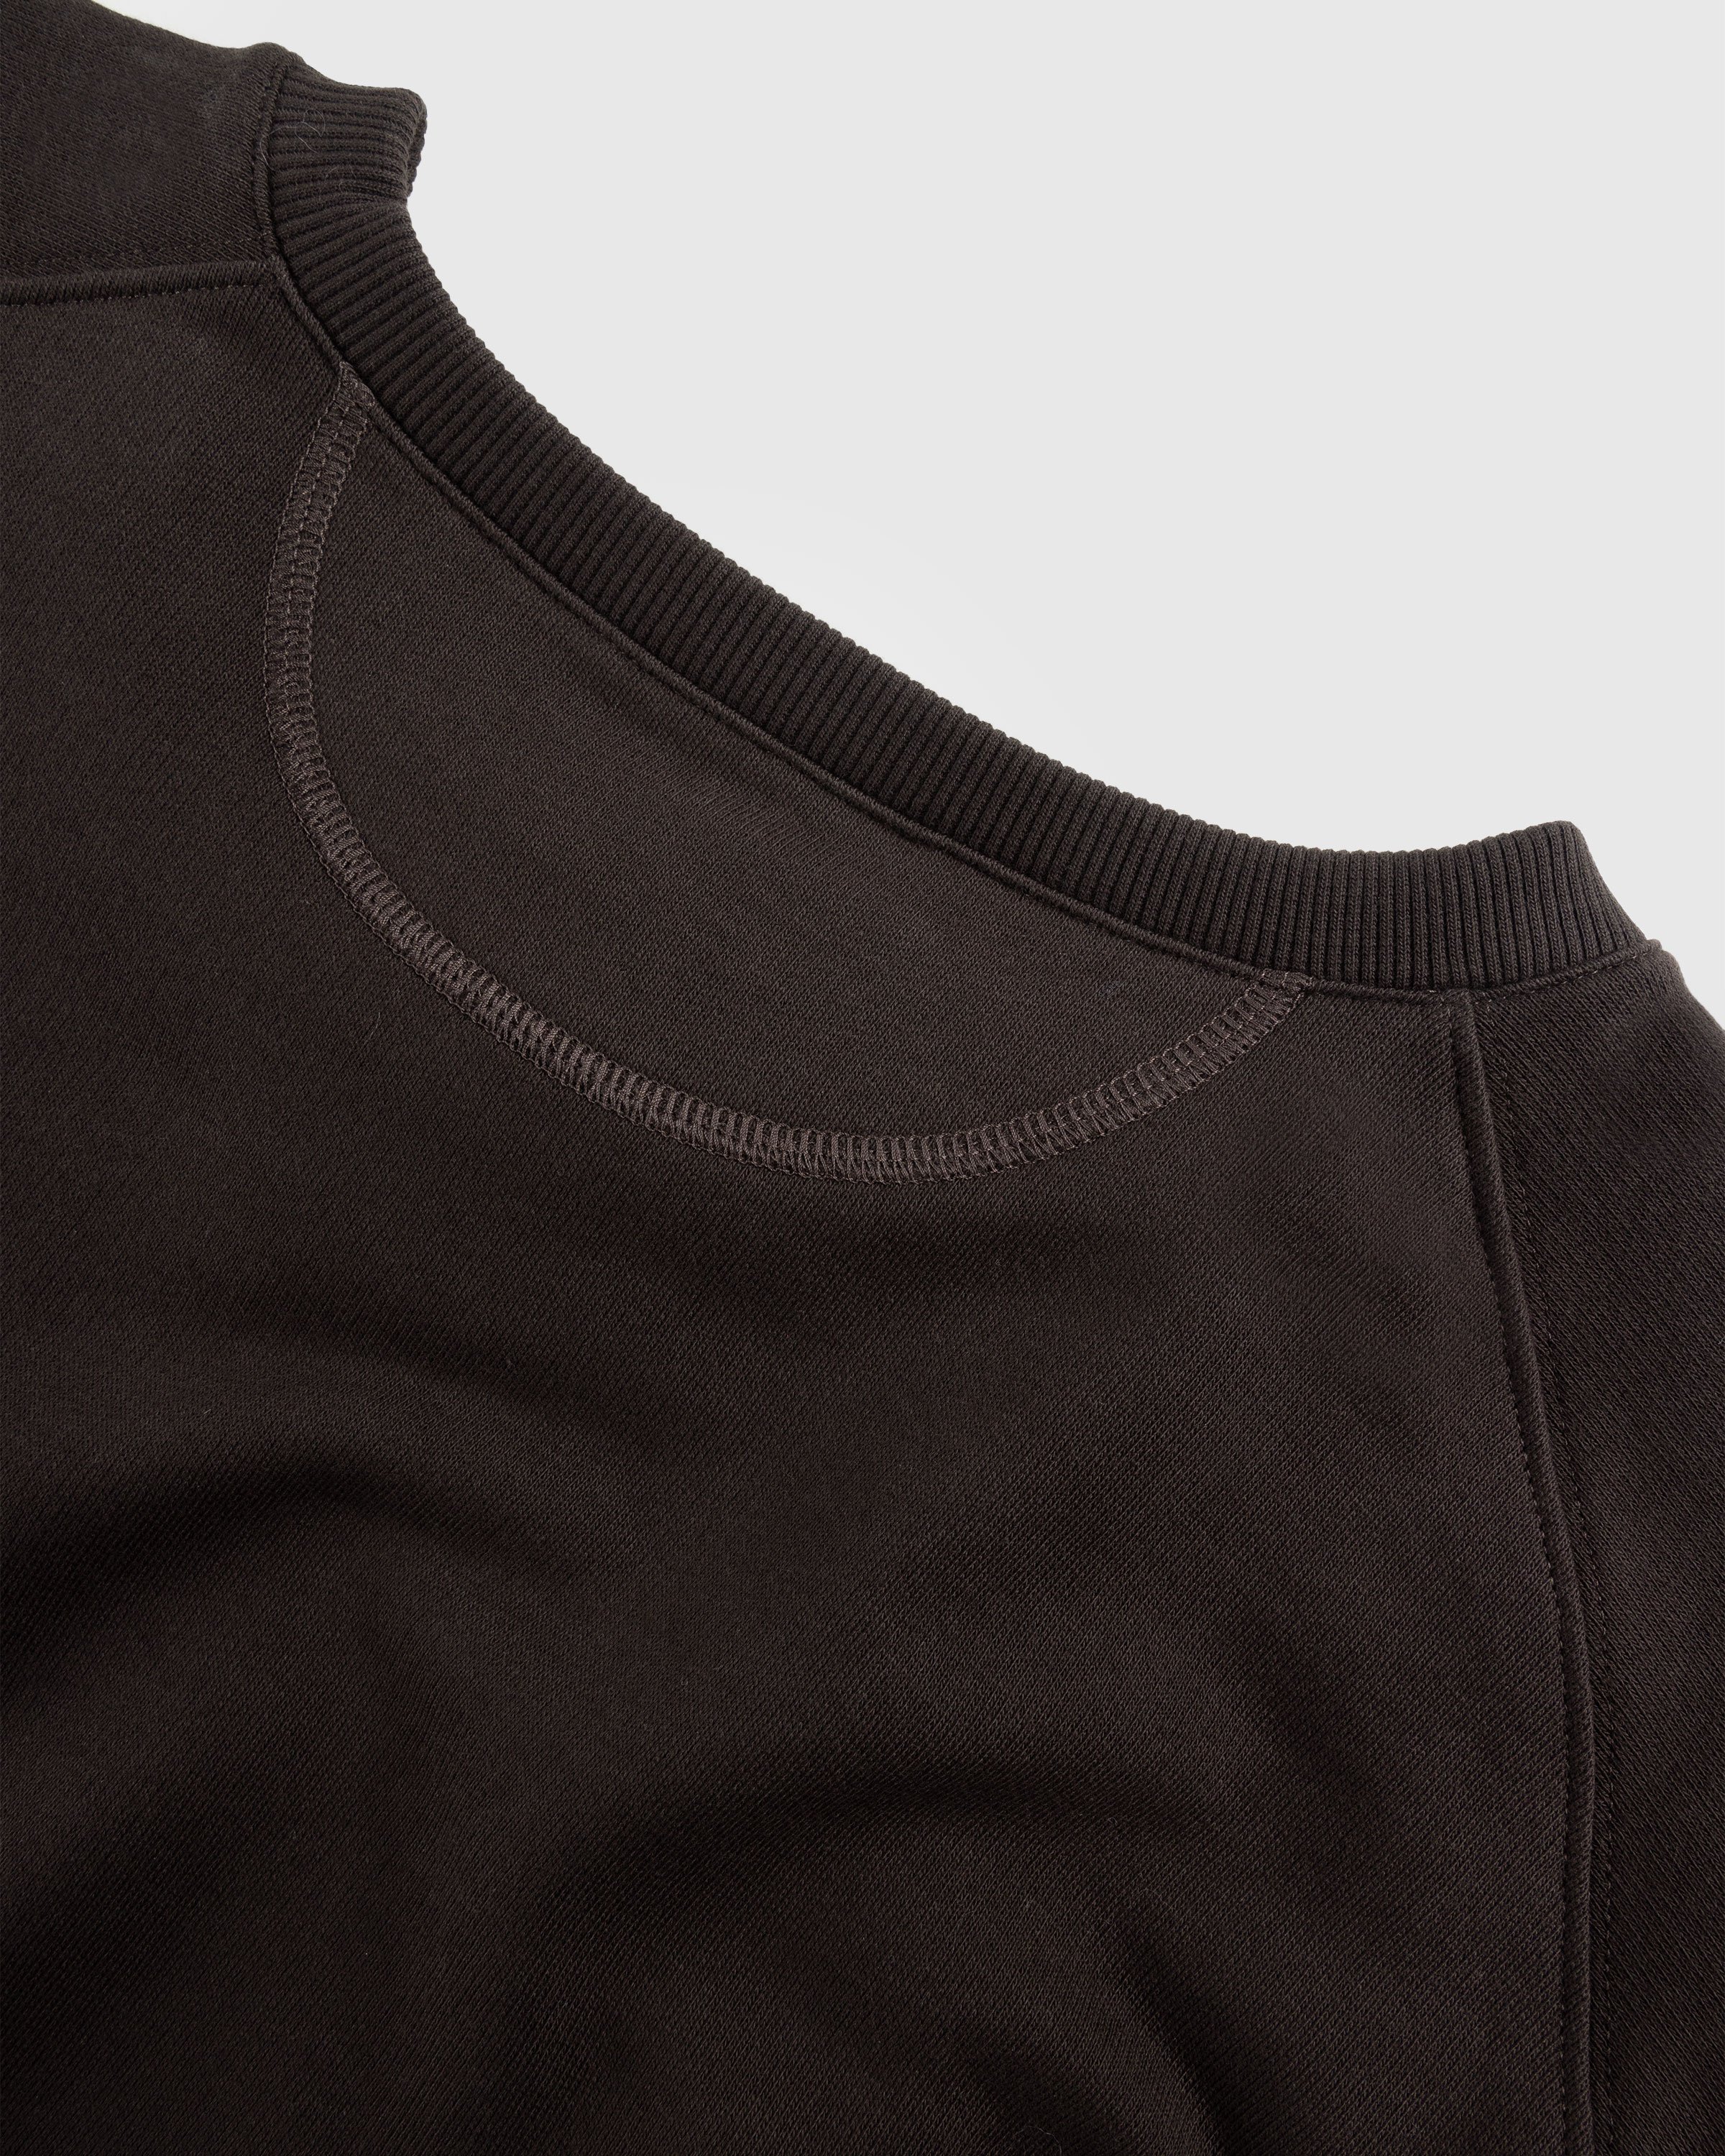 Meta Campania Collective - Sigmar Jersey Cotton Short Sleeve Crew Neck Dark Chocolate Brown - Clothing - Brown - Image 7